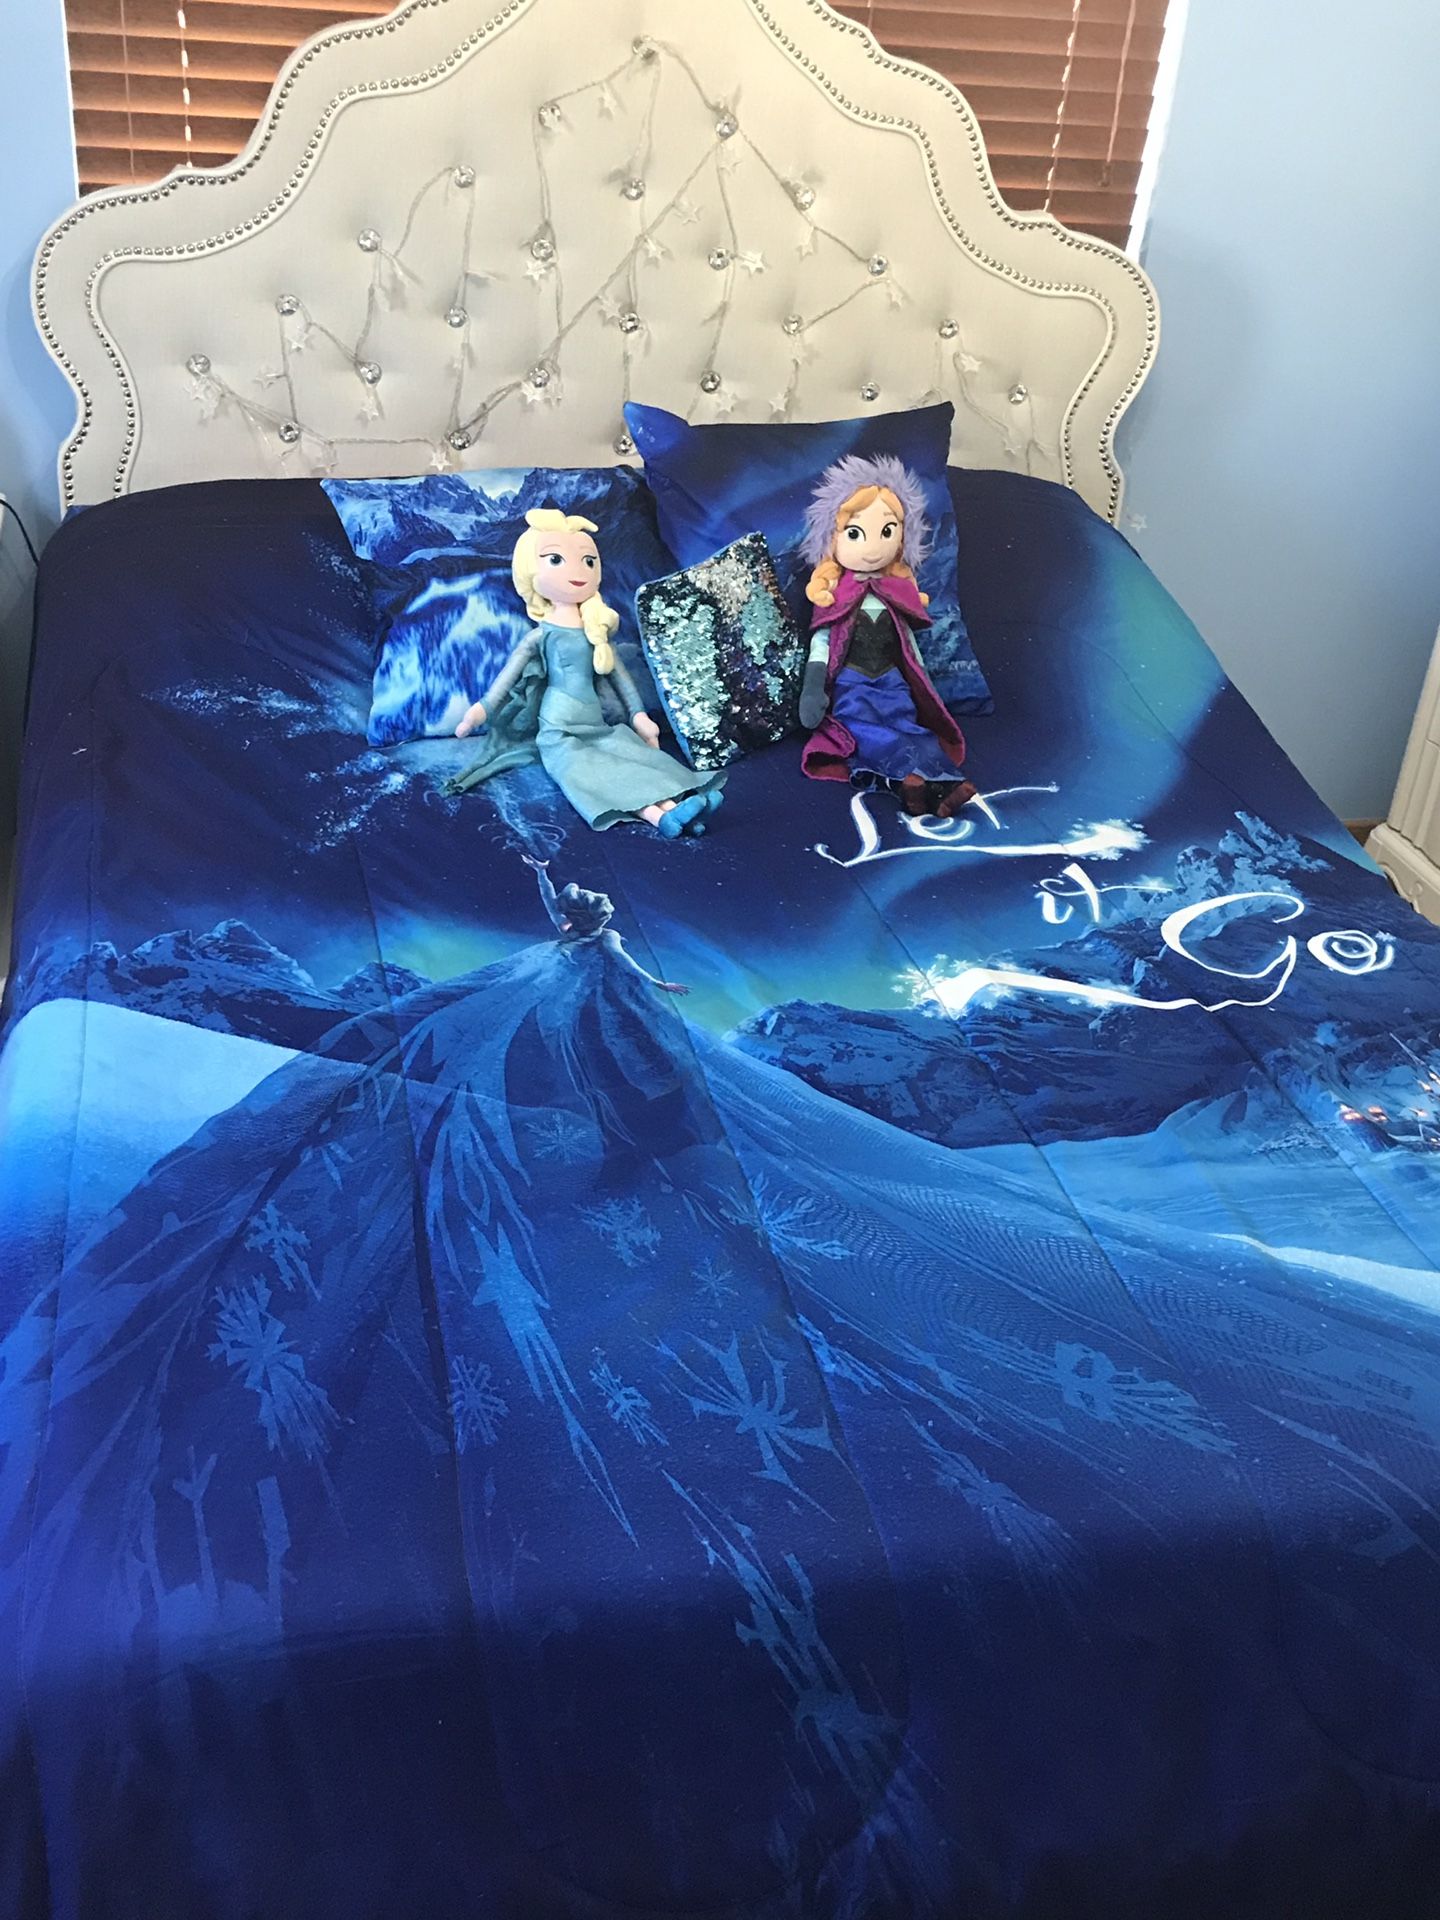 Full reversible Disney Frozen Princess comforter